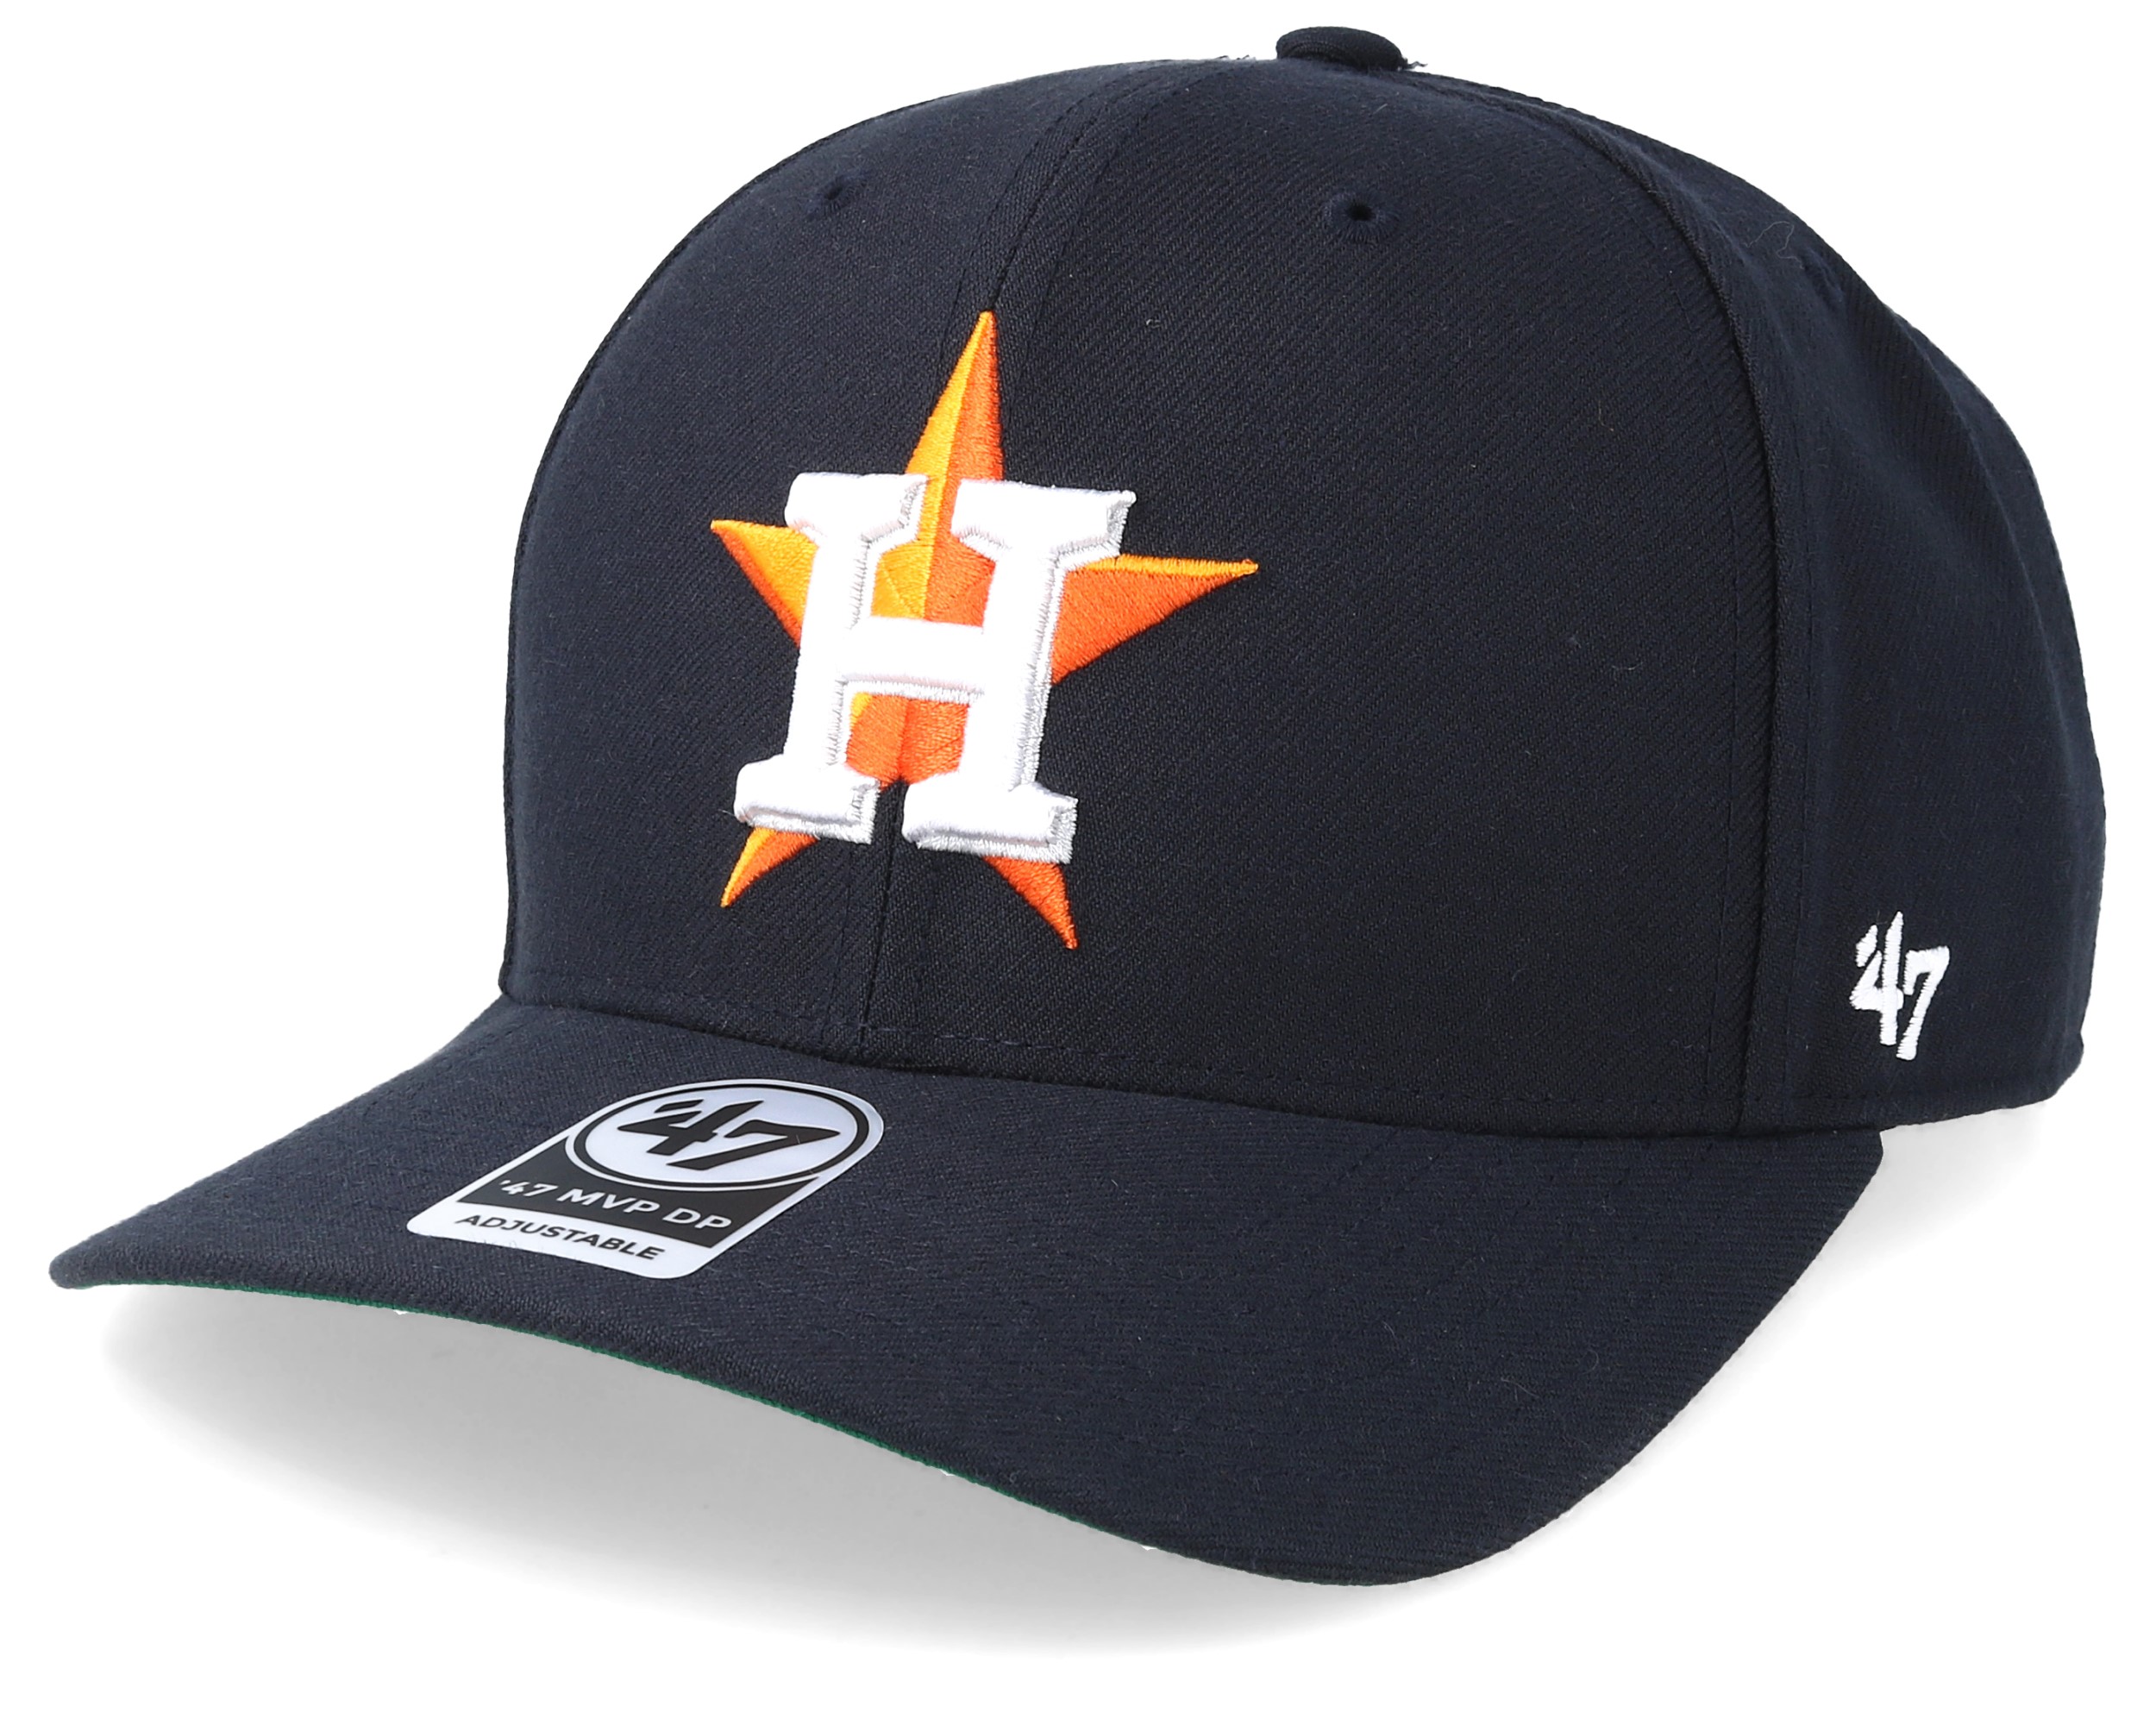 Gorra ´47 MLB Houston Astros MVP  Martí tienda en linea - Martí MX